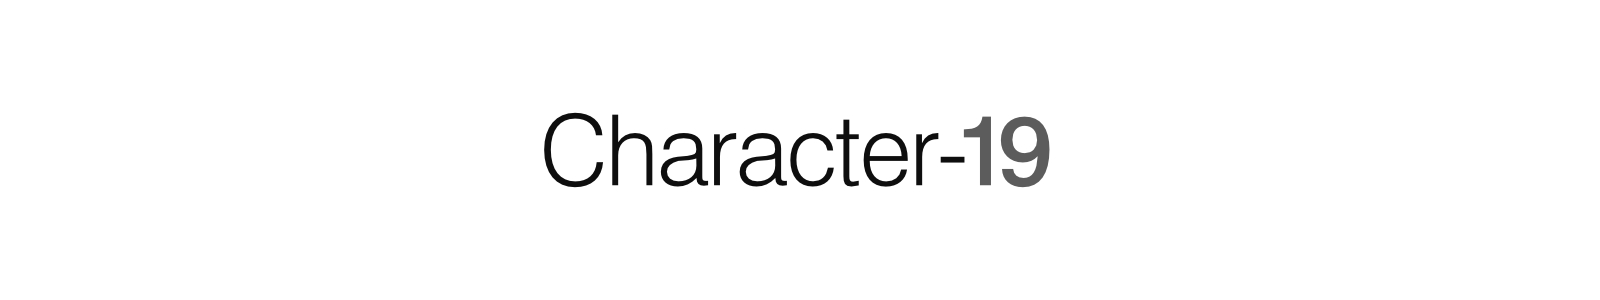 Character-19